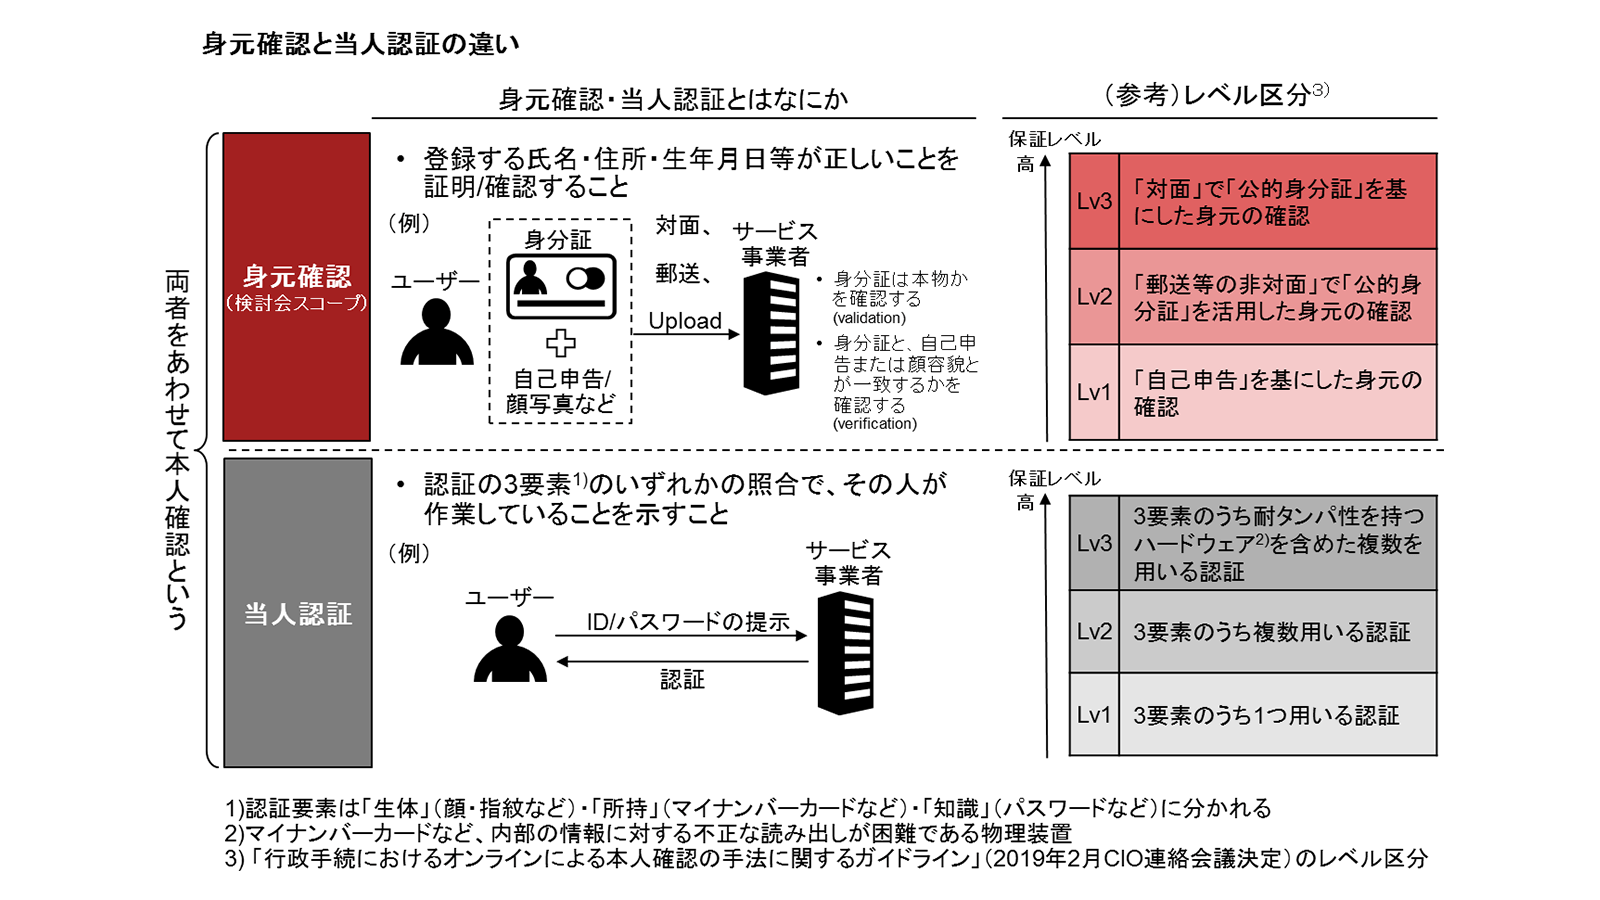 https://www.meti.go.jp/press/2020/04/20200417002/20200417002.html 2020年8月25日最終アクセス